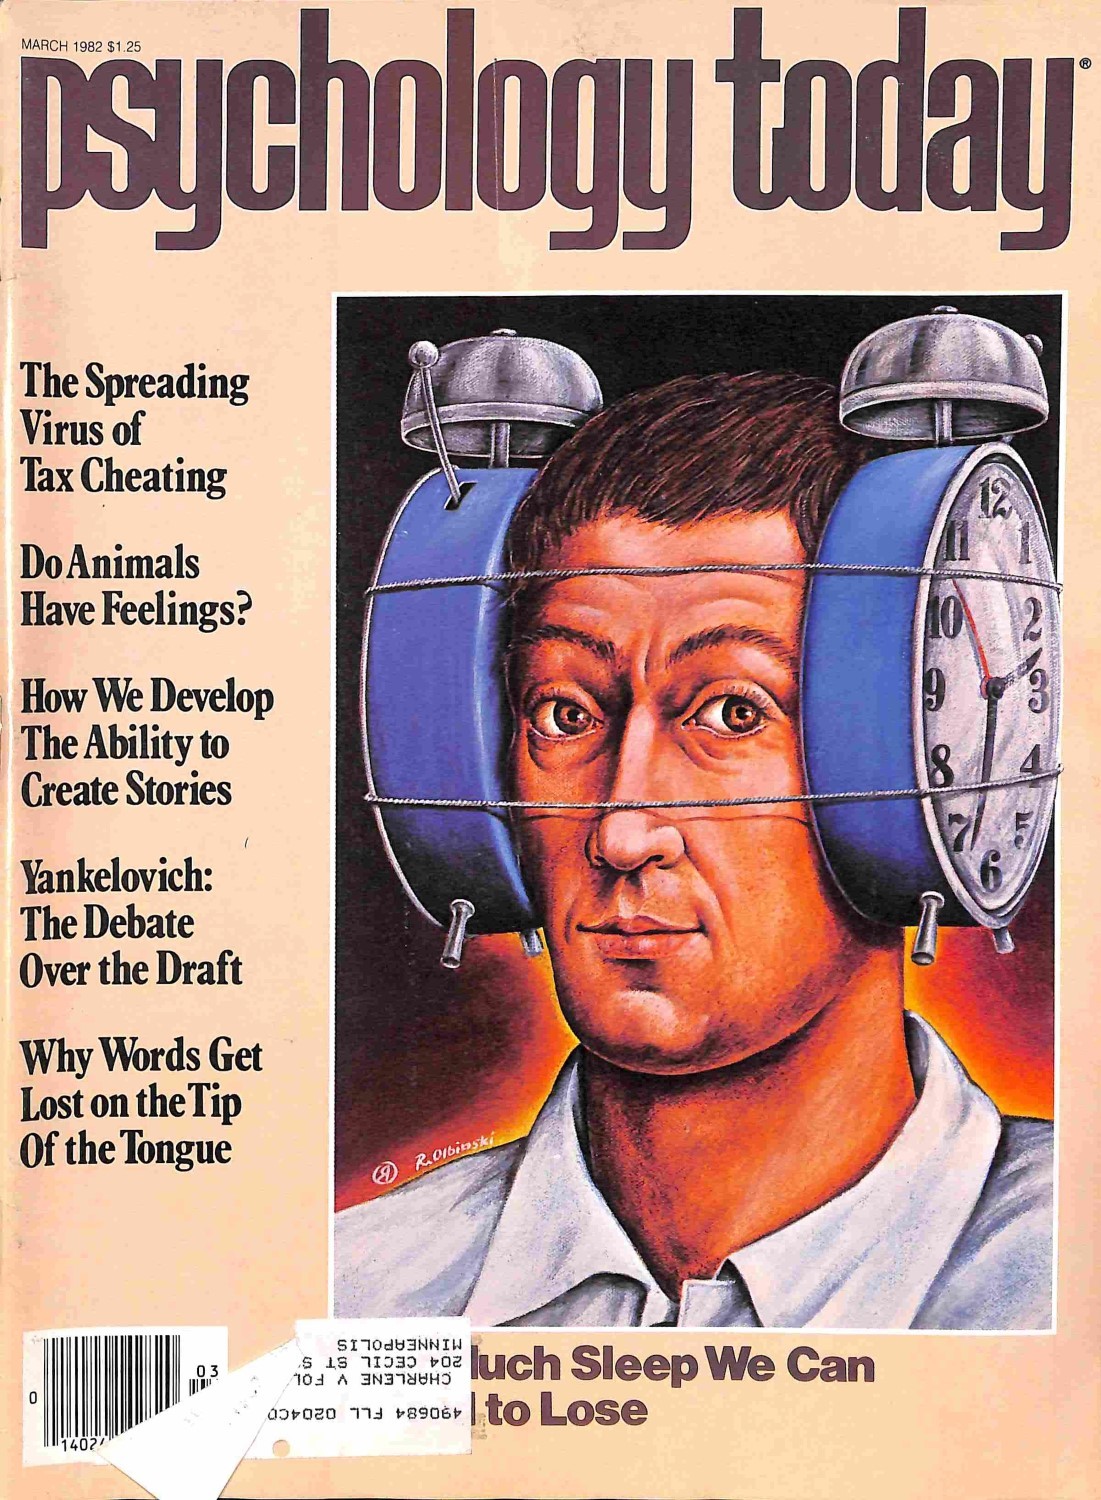 pychology today magazzine warped reality